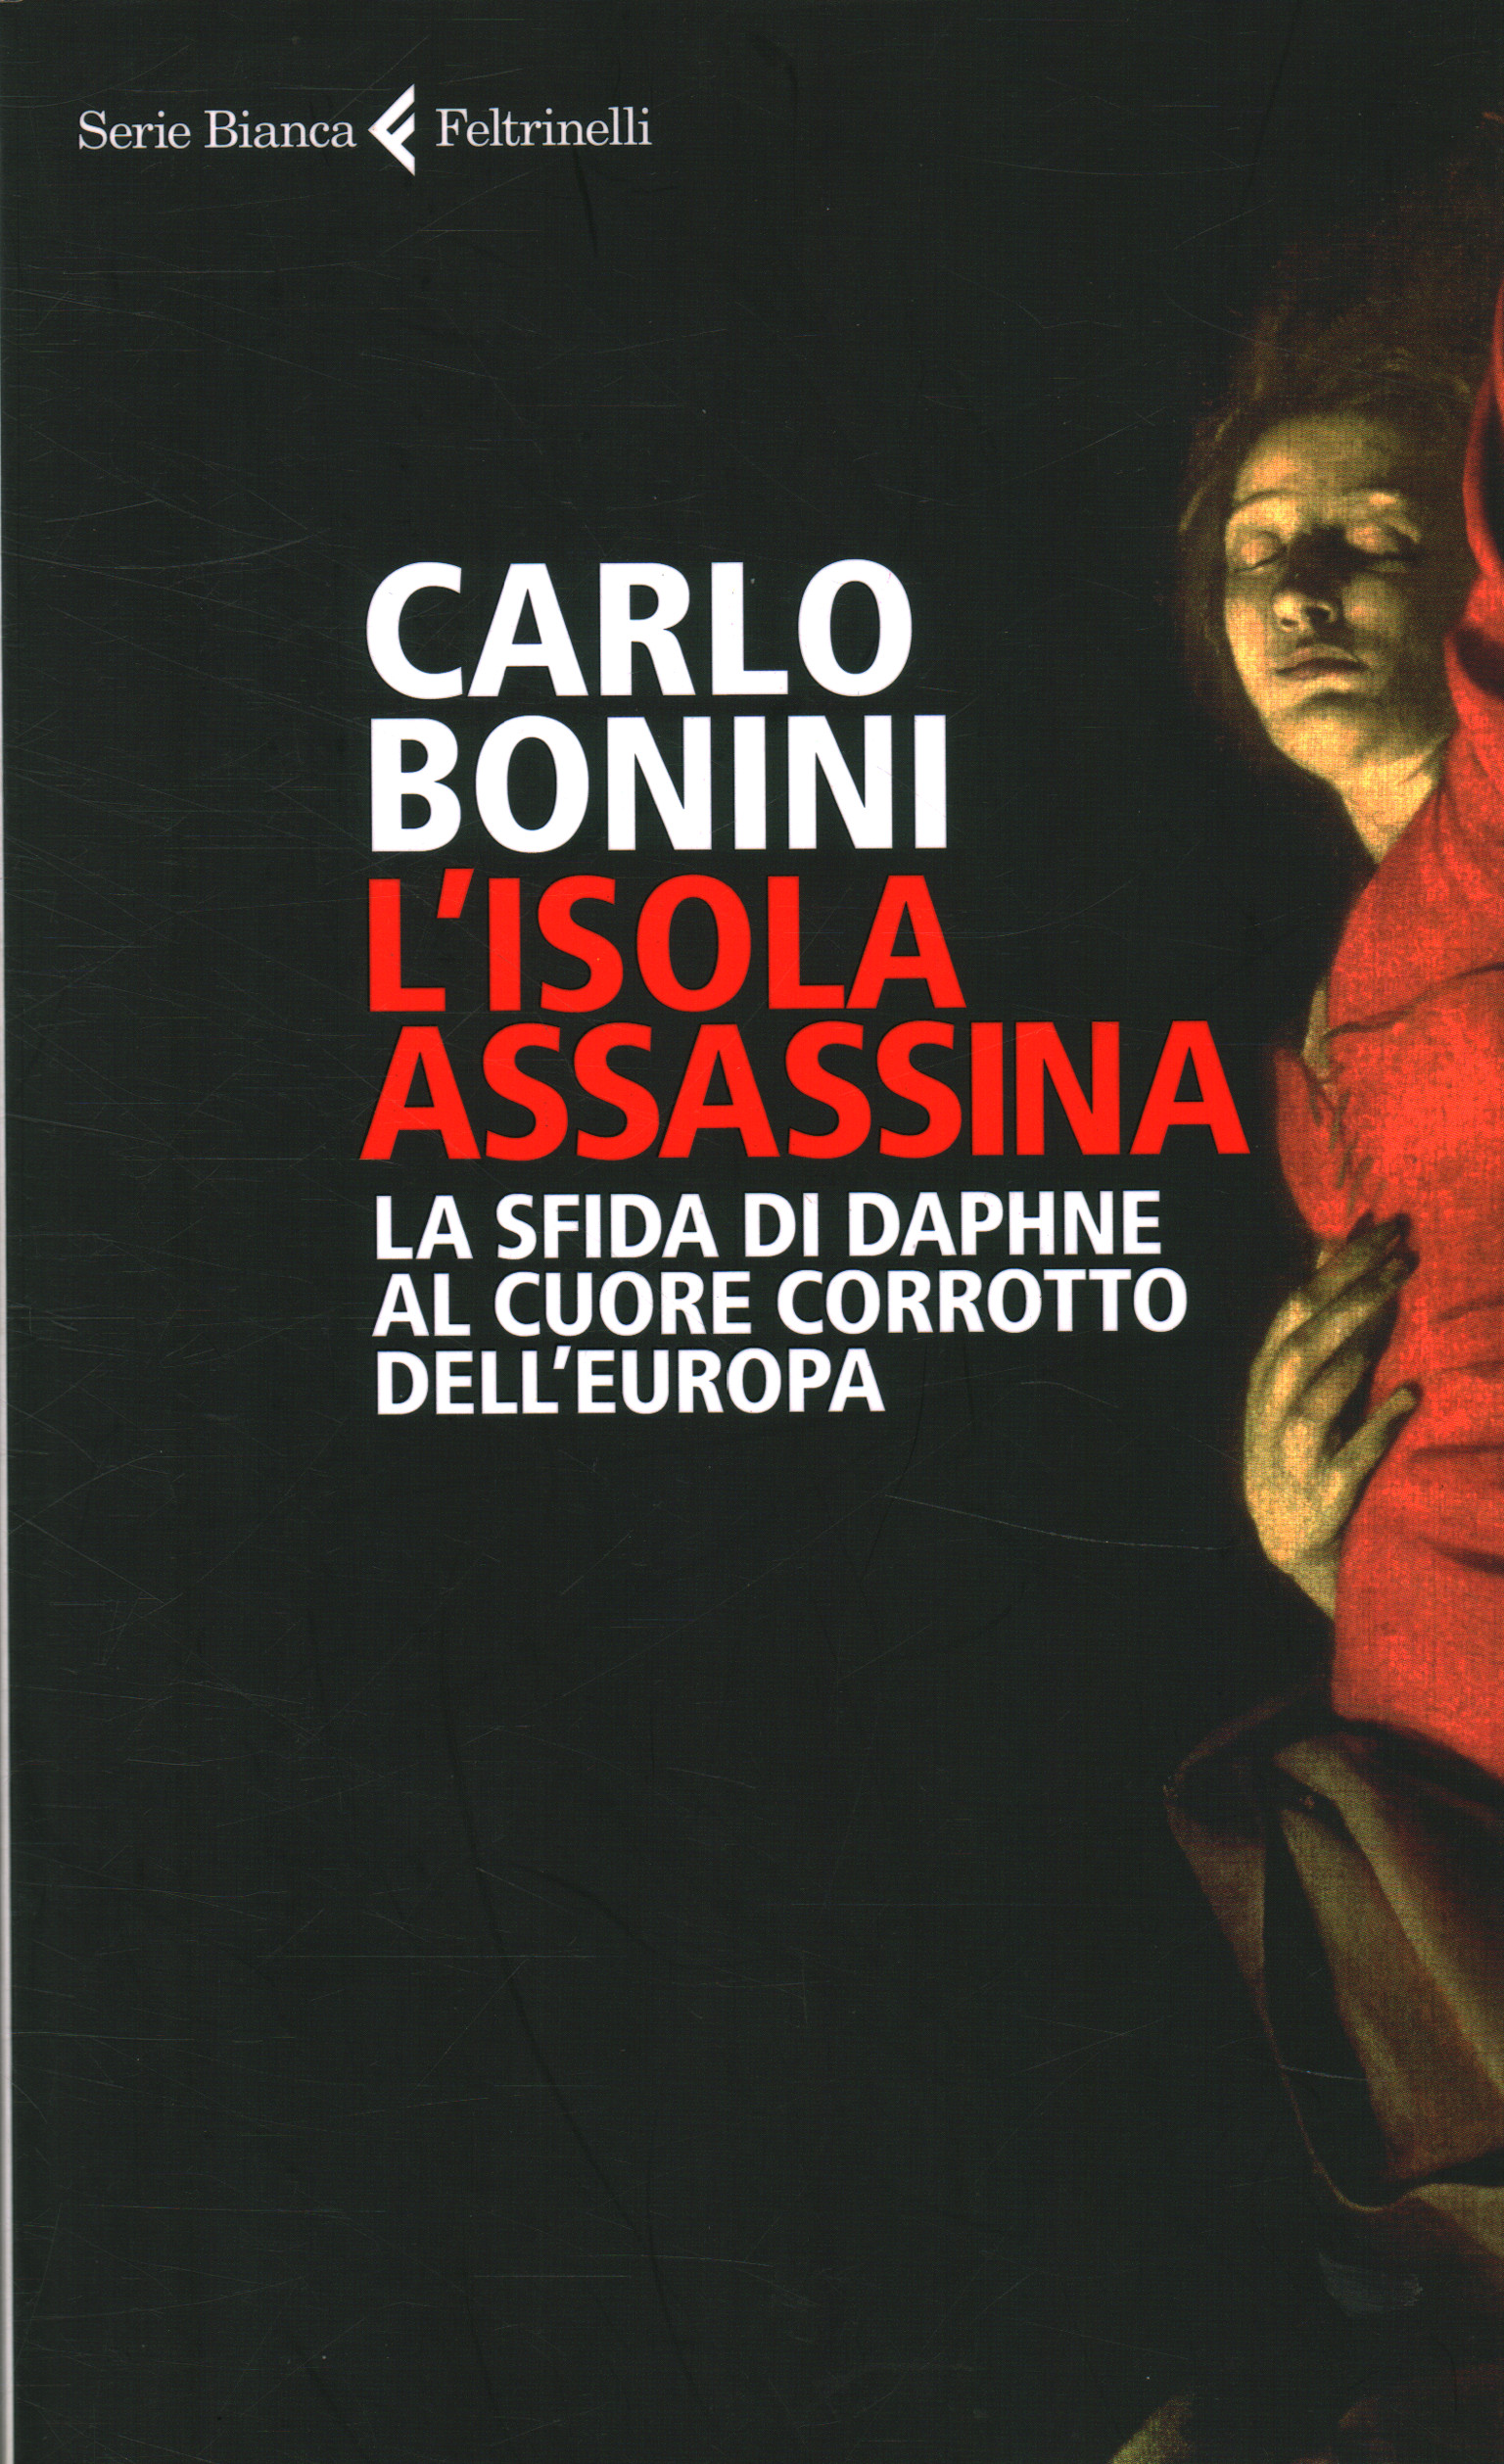 The murderous island, Carlo Bonini